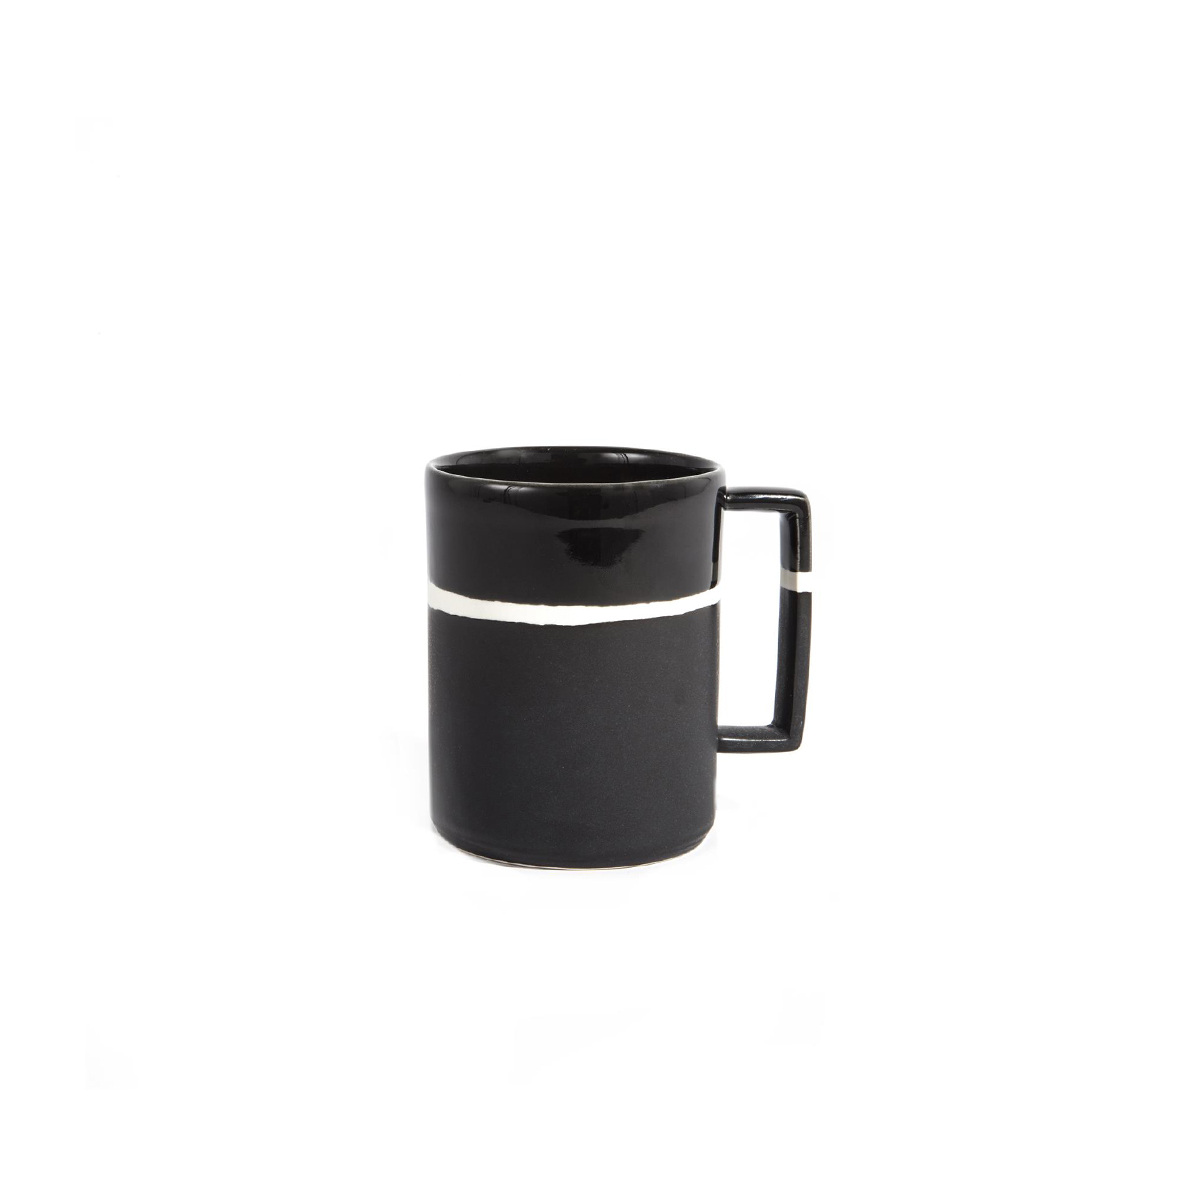 Mug Sicilia, Black Radish - H10 cm x ⌀7,5 - Ceramic - image 5